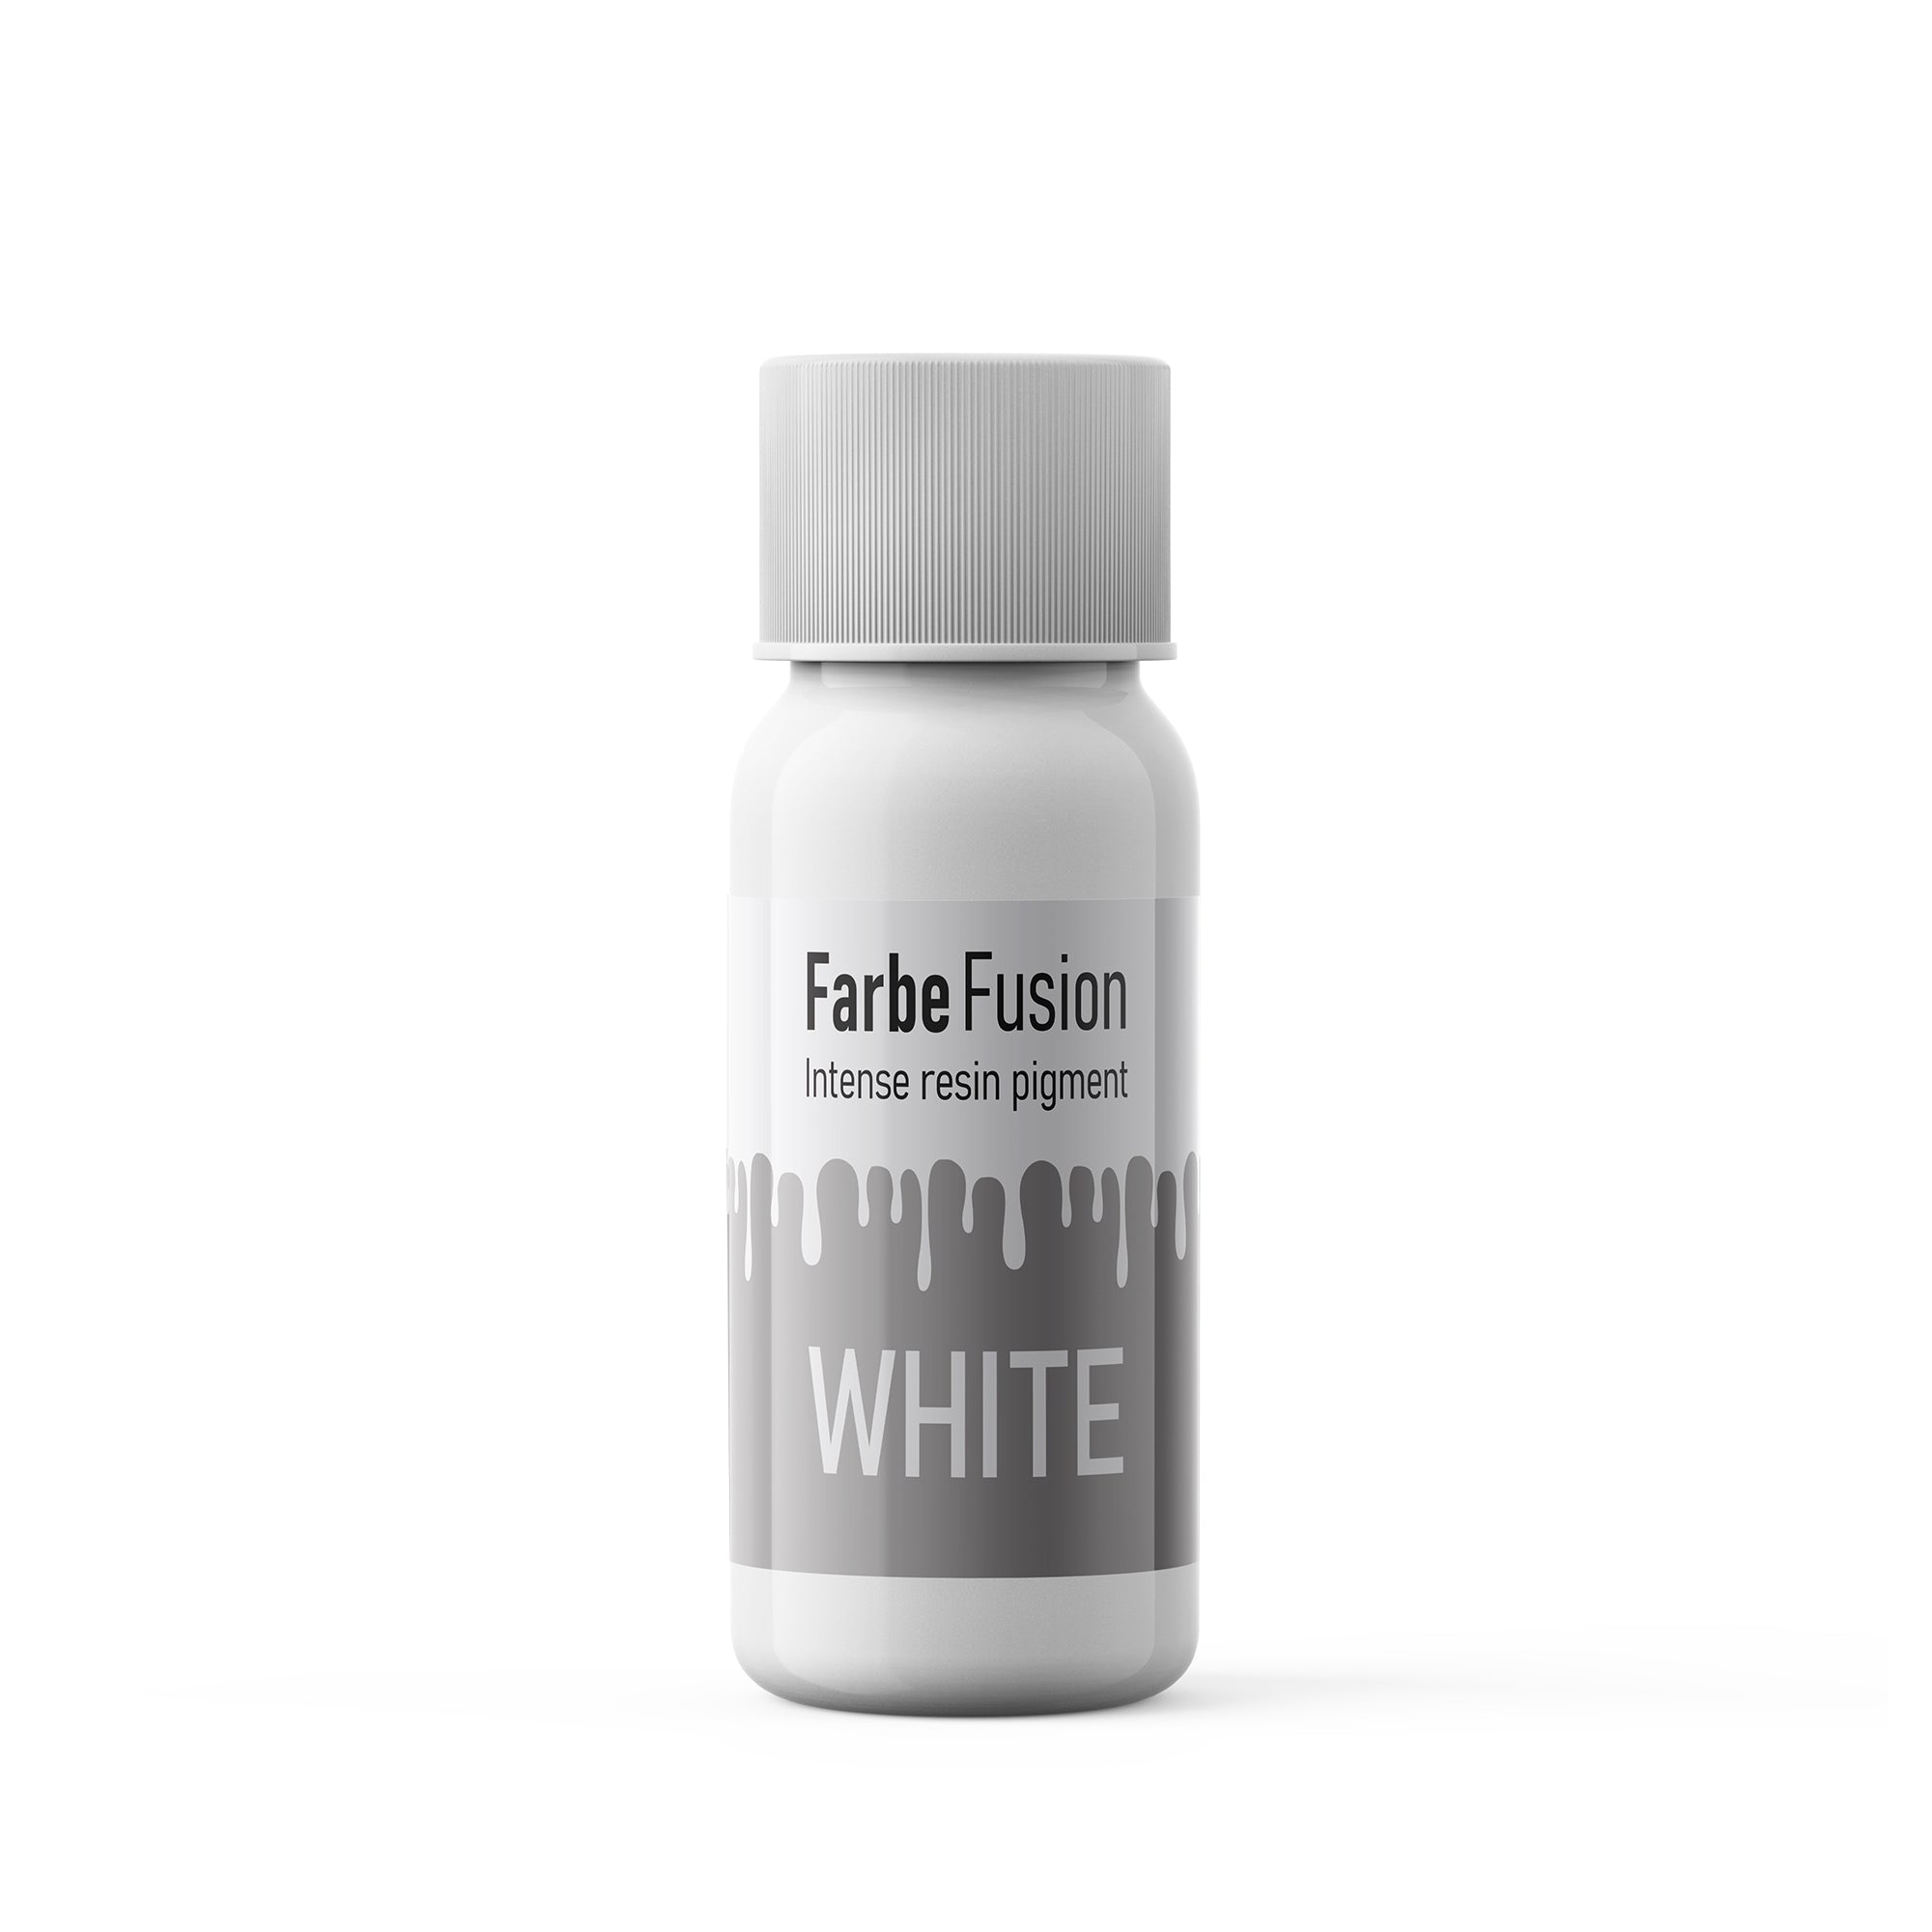 Woodberg - Farbe Fusion White Resin Pigment | صبغة ريزن سائلة لون أبيض 75 مل 